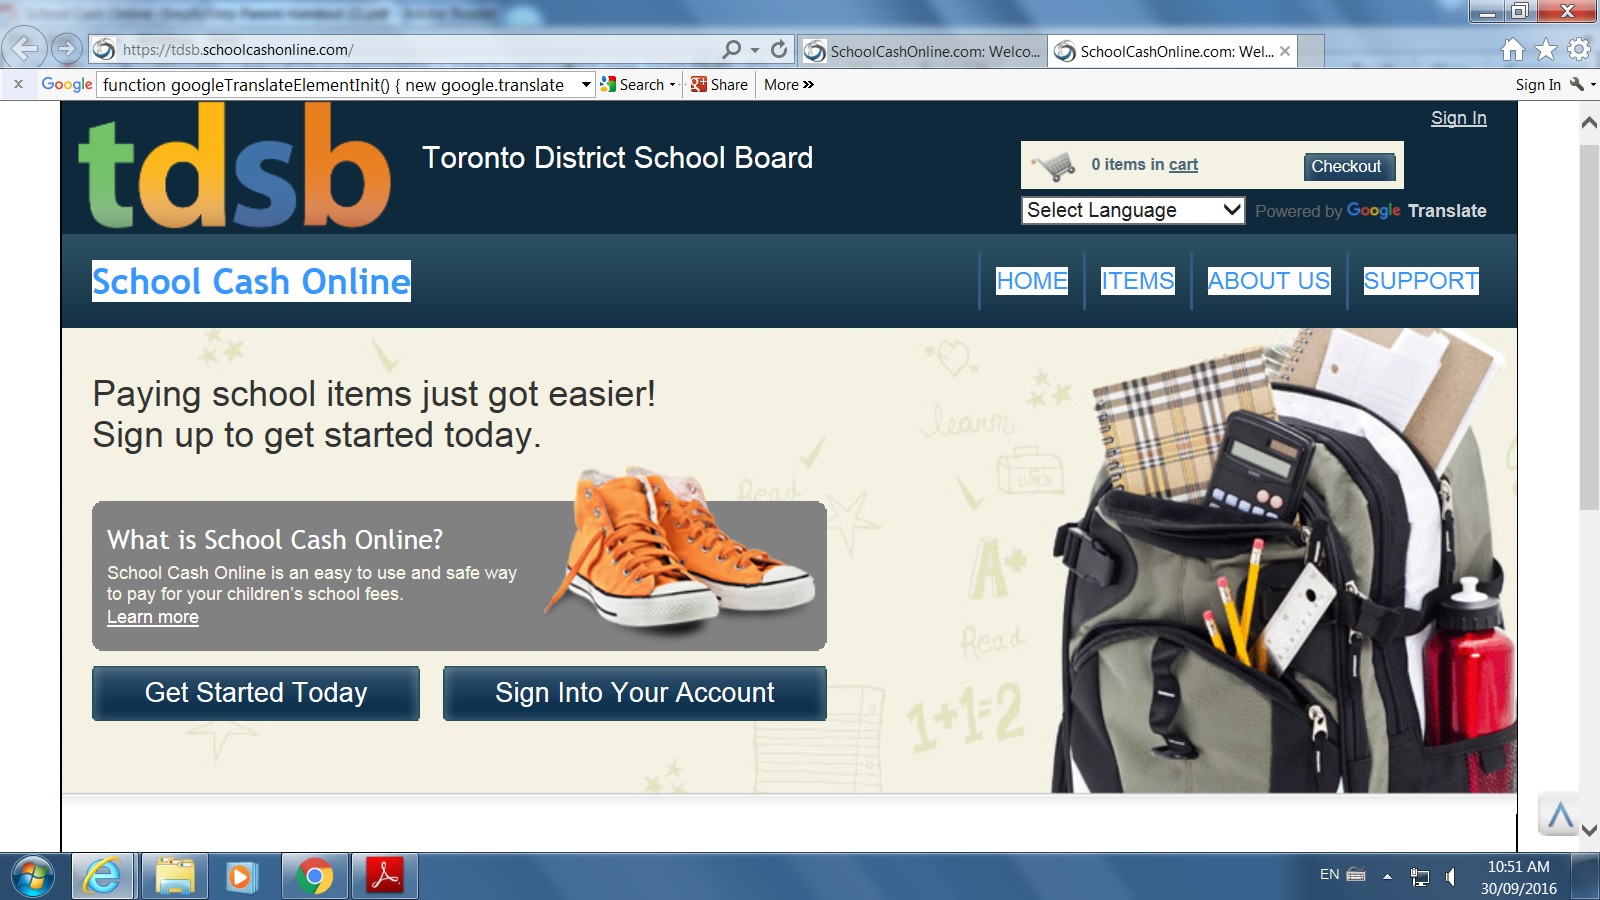 TDSB school cash online shop